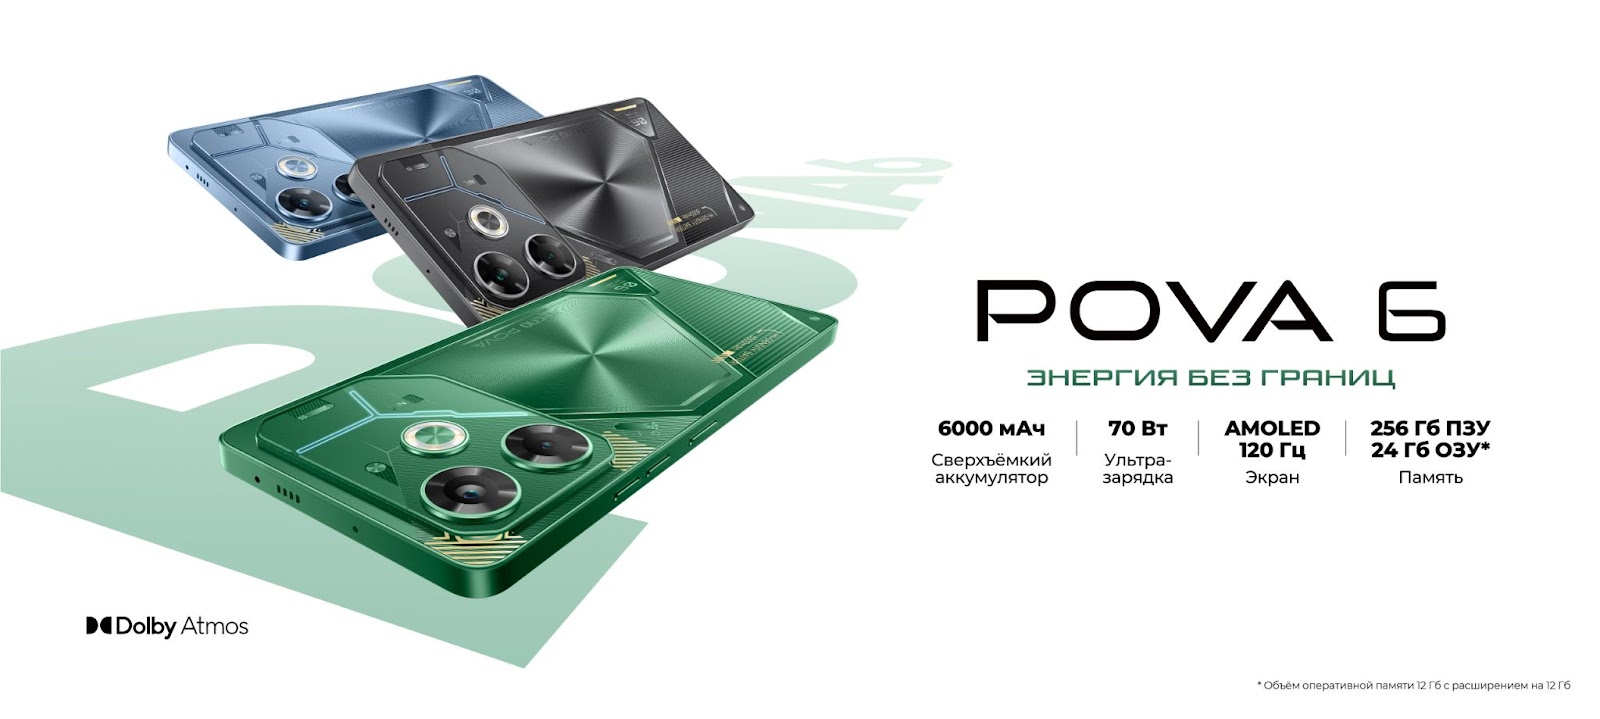 Tecno представил новые модели серии POVA 6